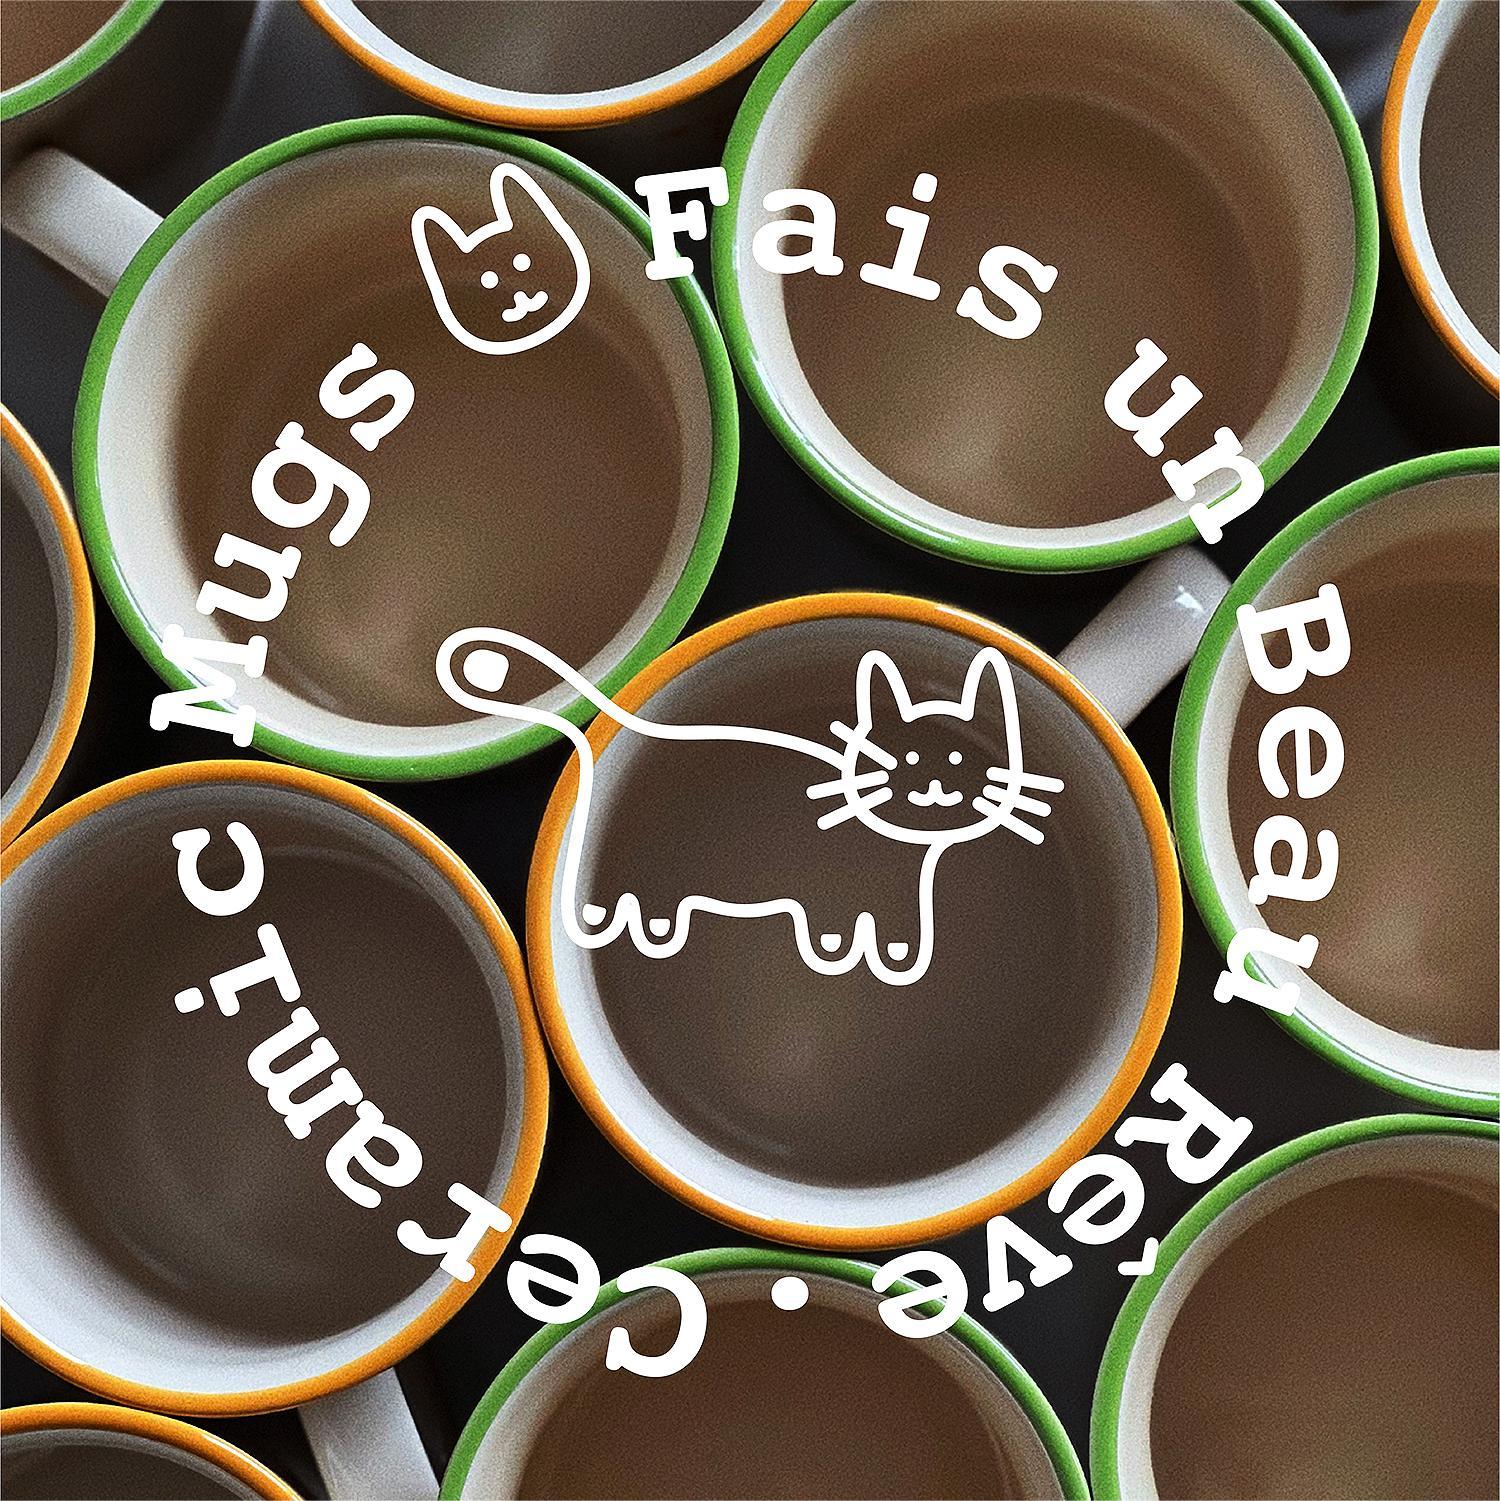 Fais un Beau Rêve Ceramic Coffee Mug with Cute Cat illustration Pattern, behind is the coffee mugs.